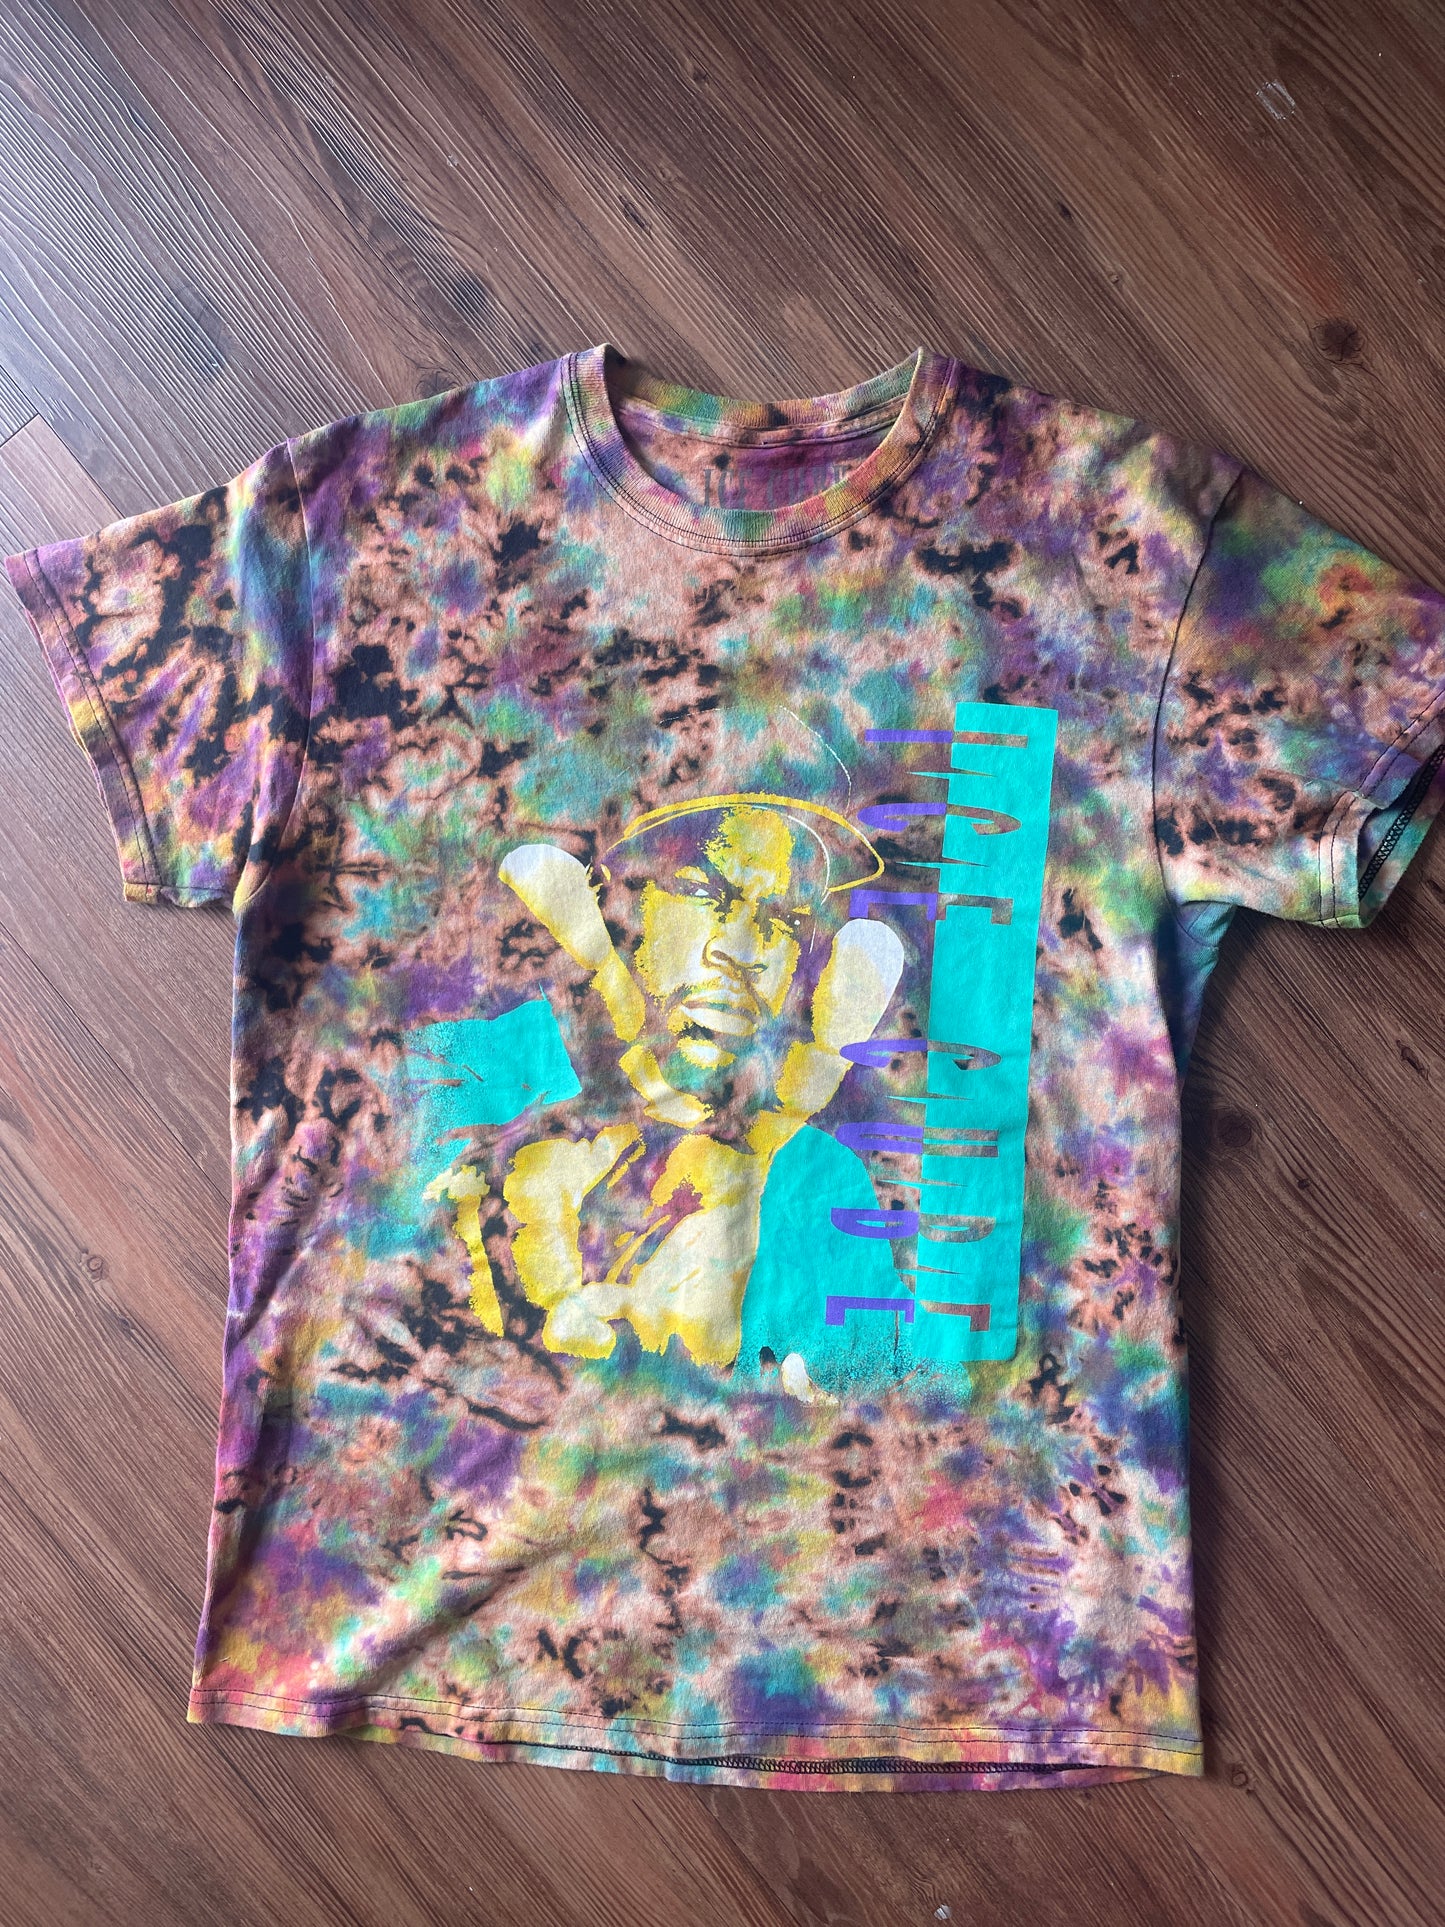 MEDIUM Men's Ice Cube Reverse Tie Dye t-shirt | NWA Bleach Crumpled